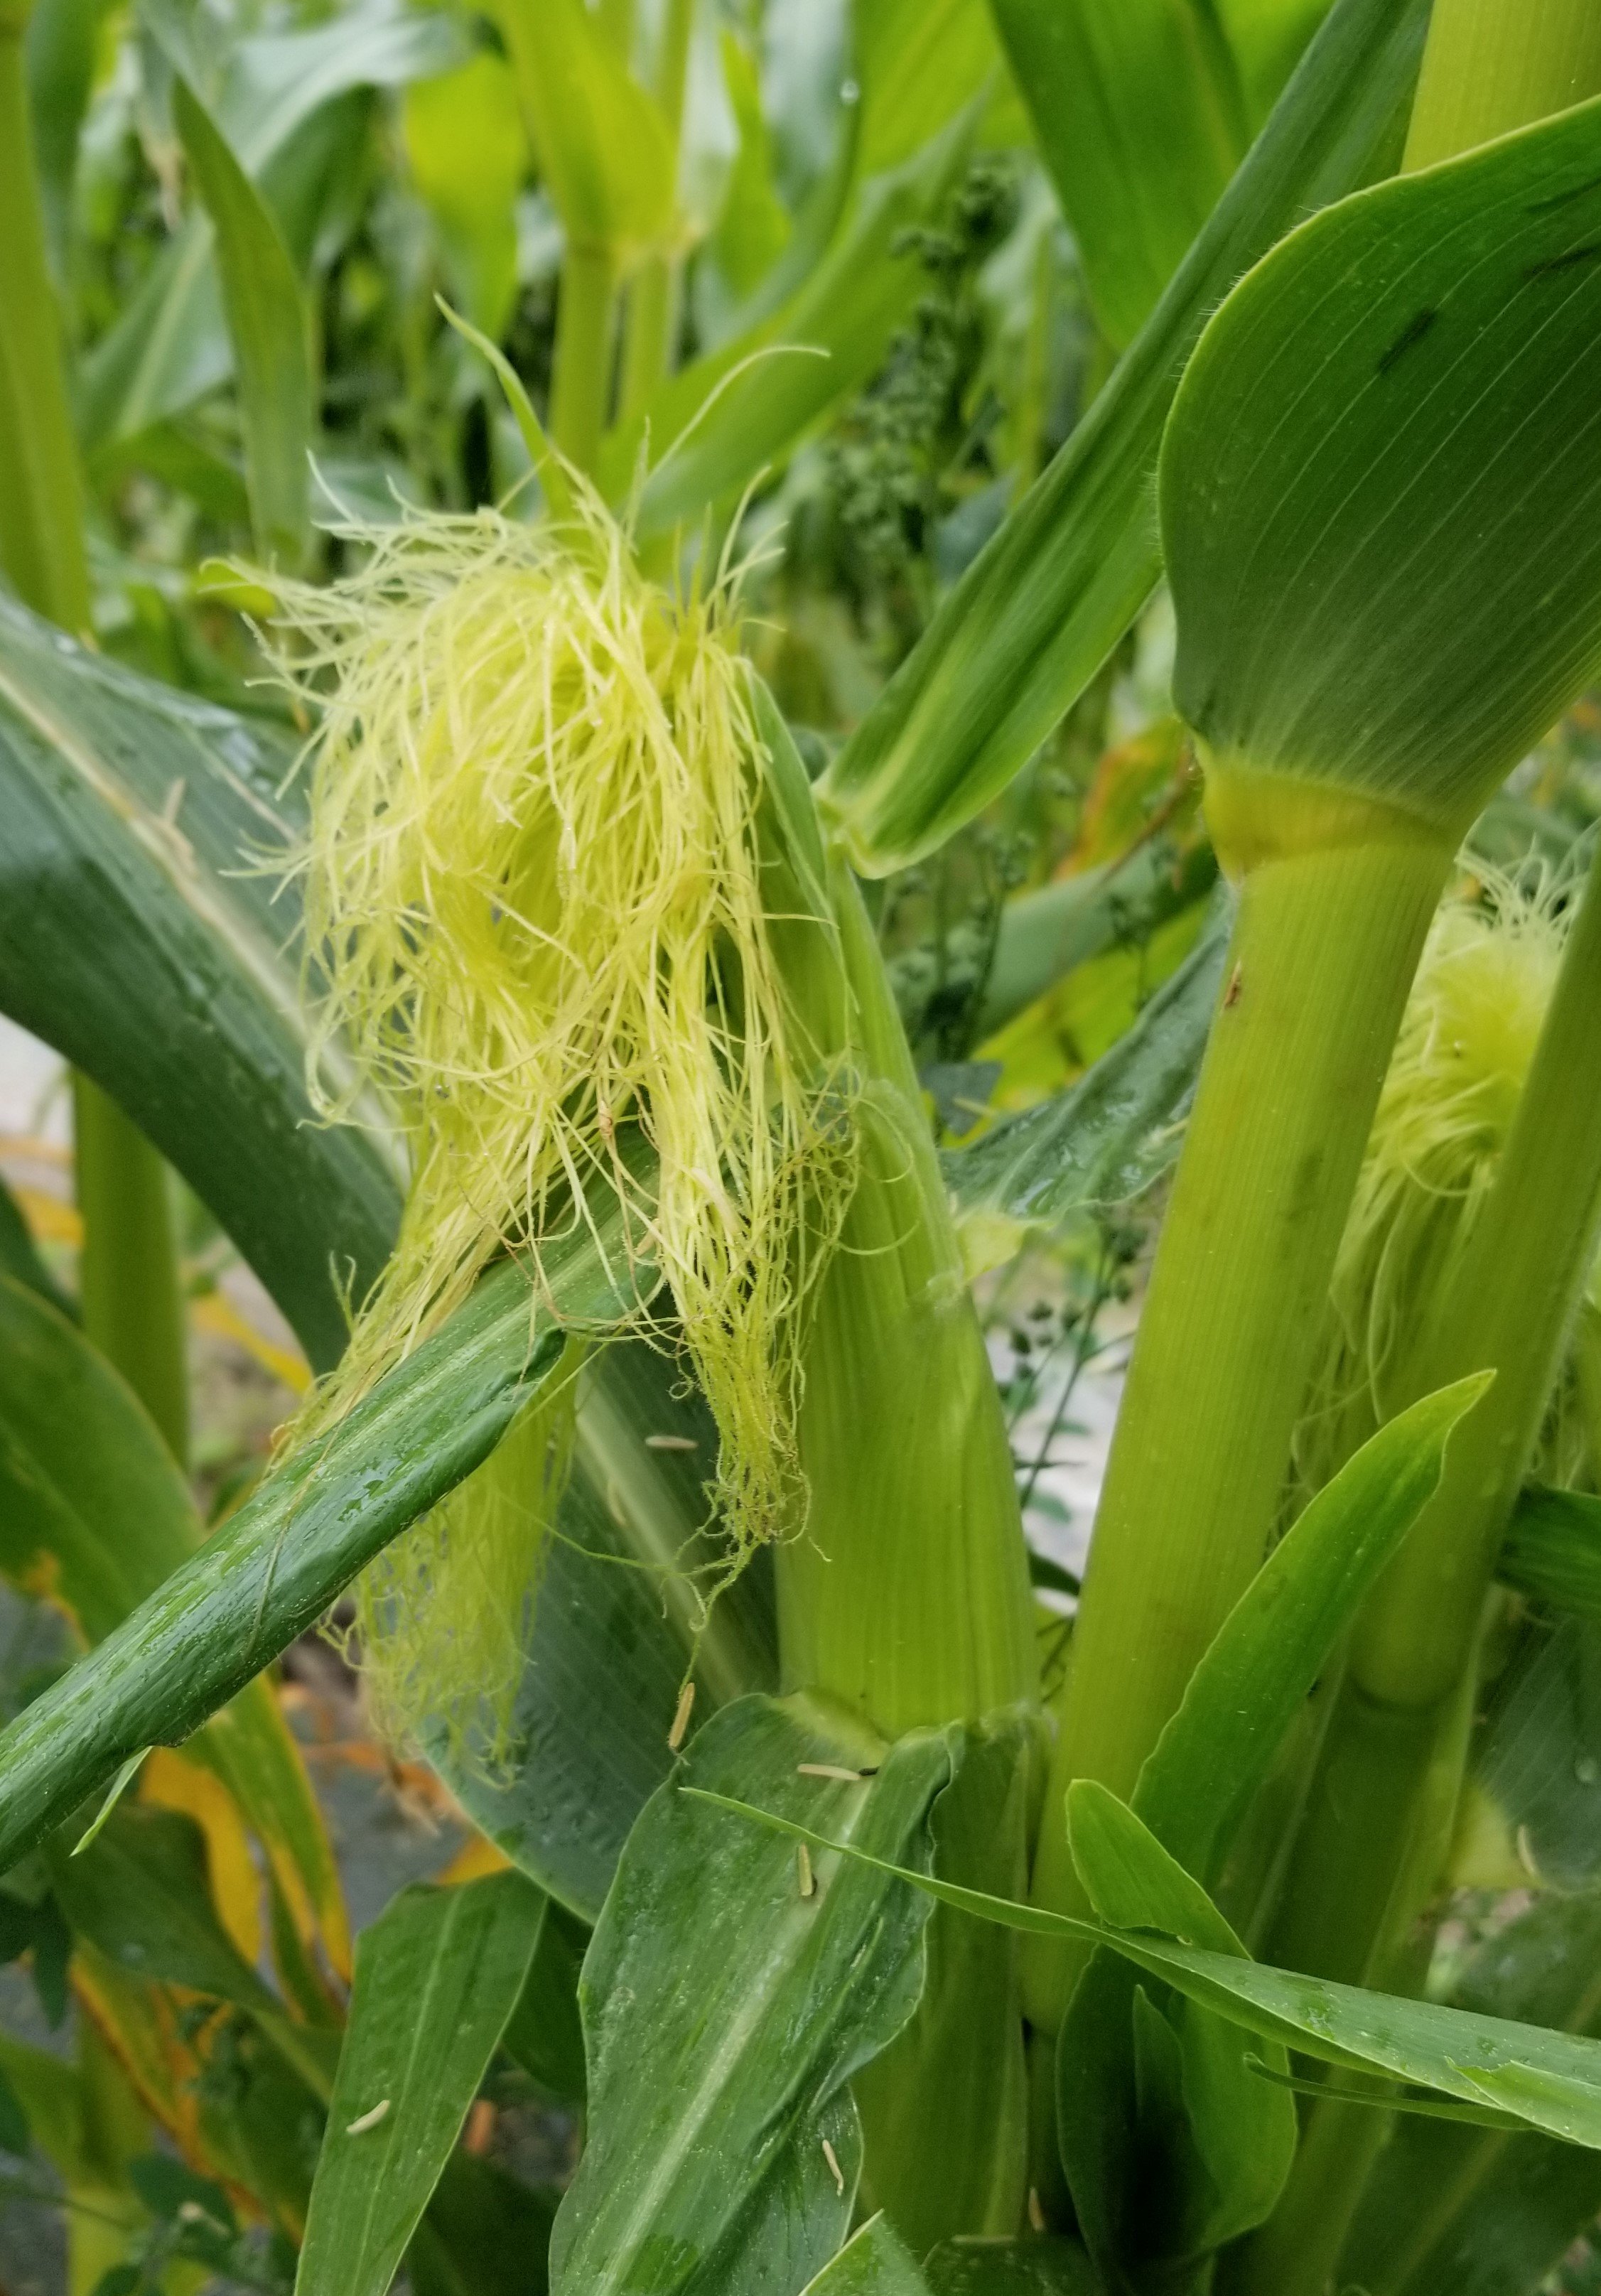 Next Happening: Corn slowly coming